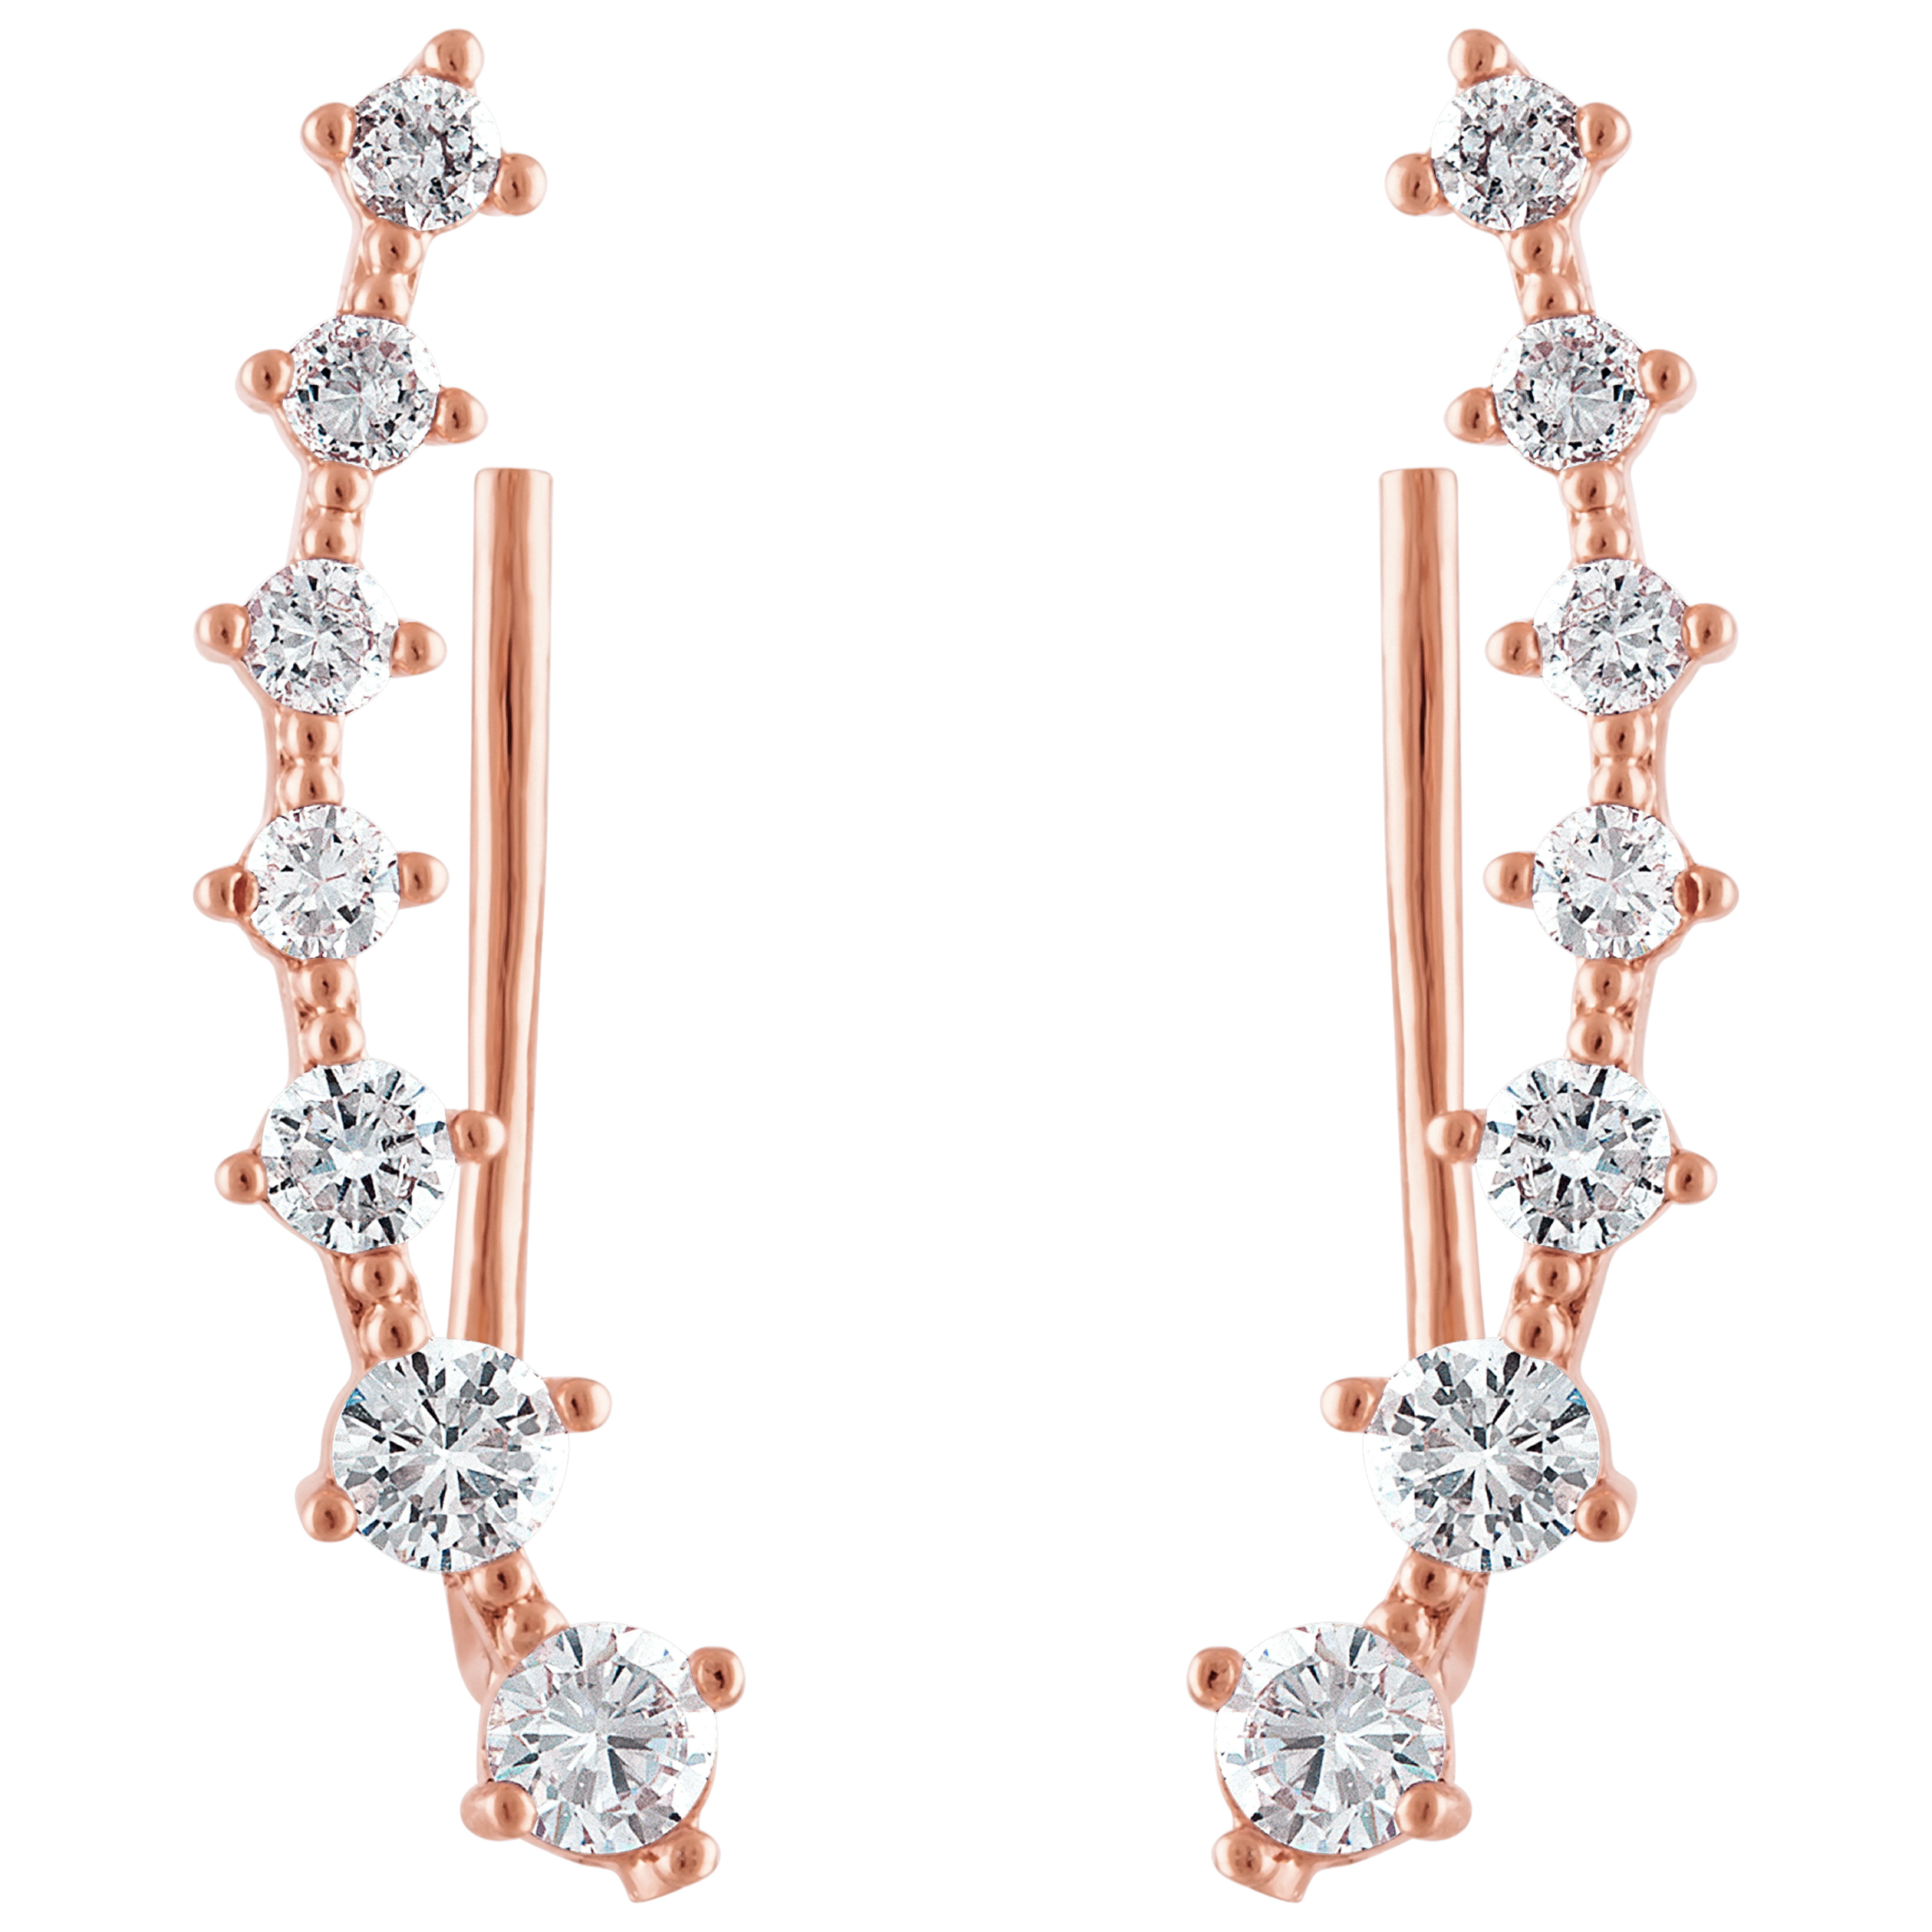 Pair Created with Zircondia® Crystals by Philip Jones Jewellery Earrings Ear Jackets & Climbers Ear Climbers Rose Gold Plated Daisy Climber Earrings 